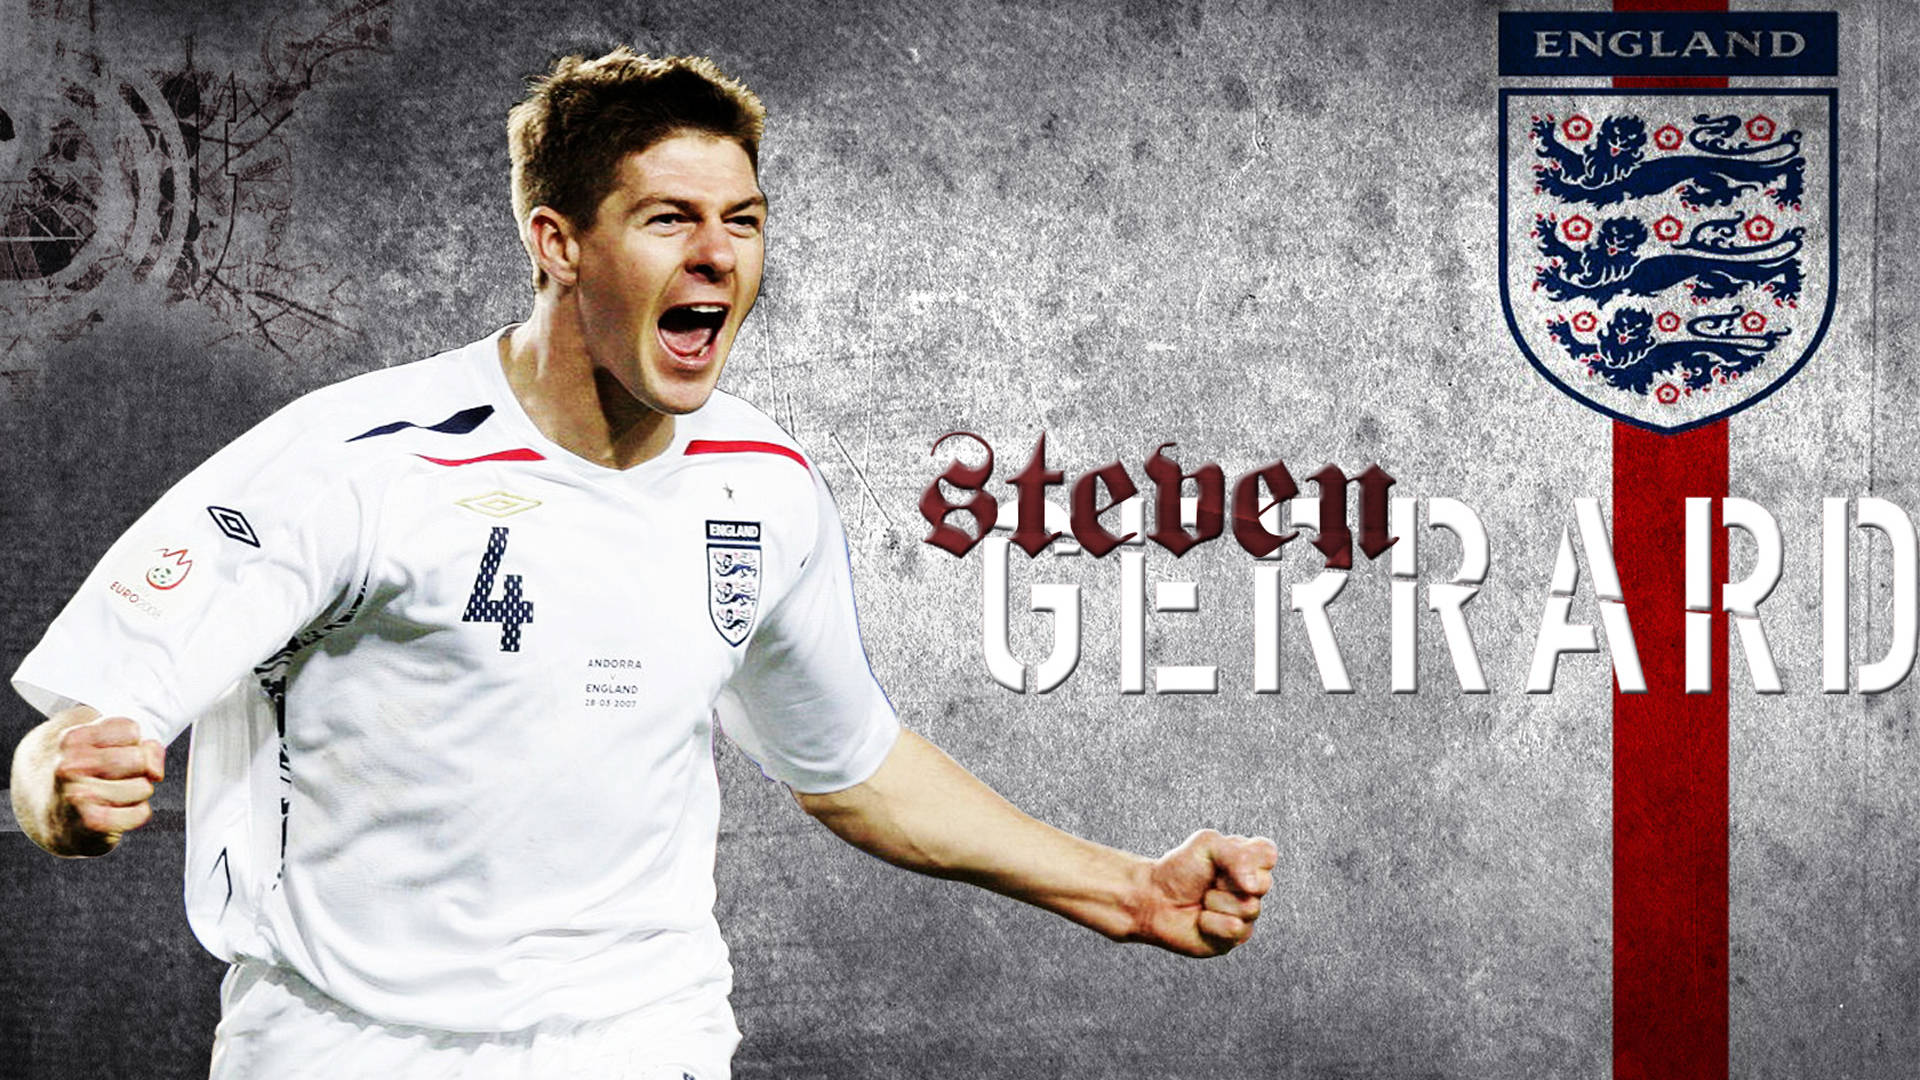 England Football Steven Gerrard Gray Background